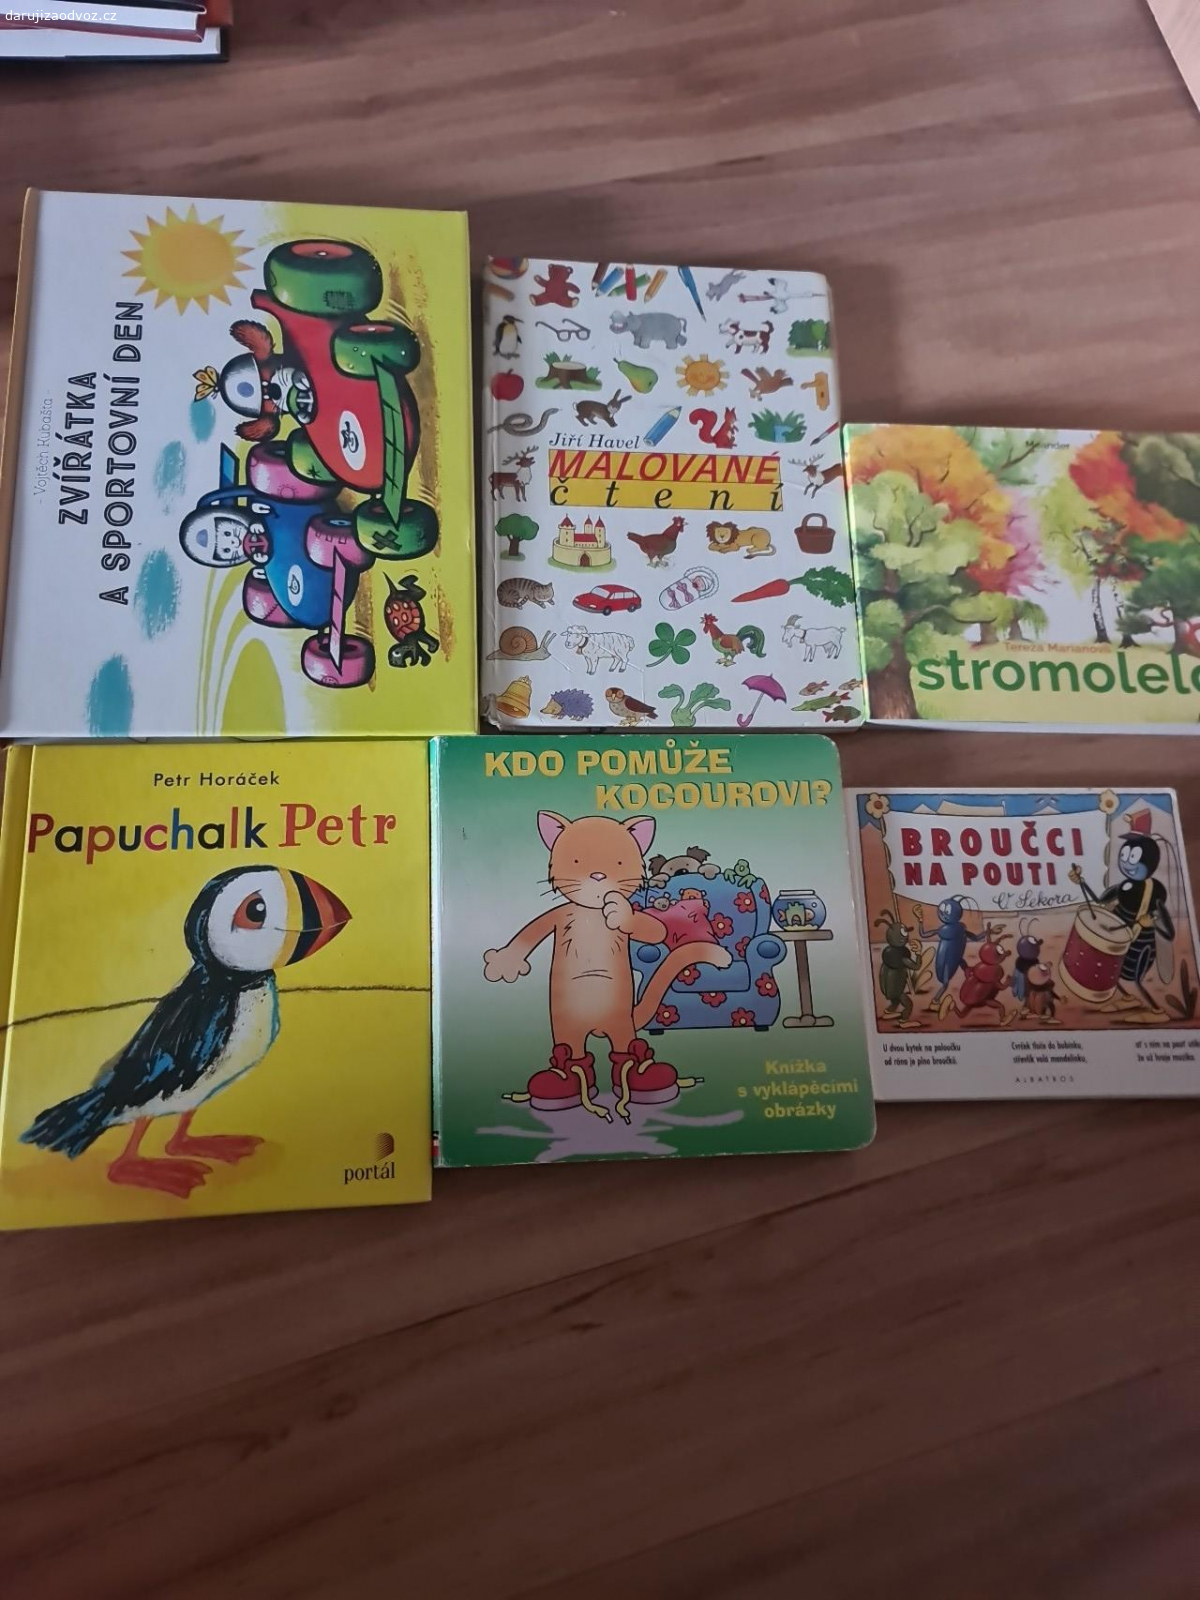 Dětské knihy. Daruji knihy pro male děti.